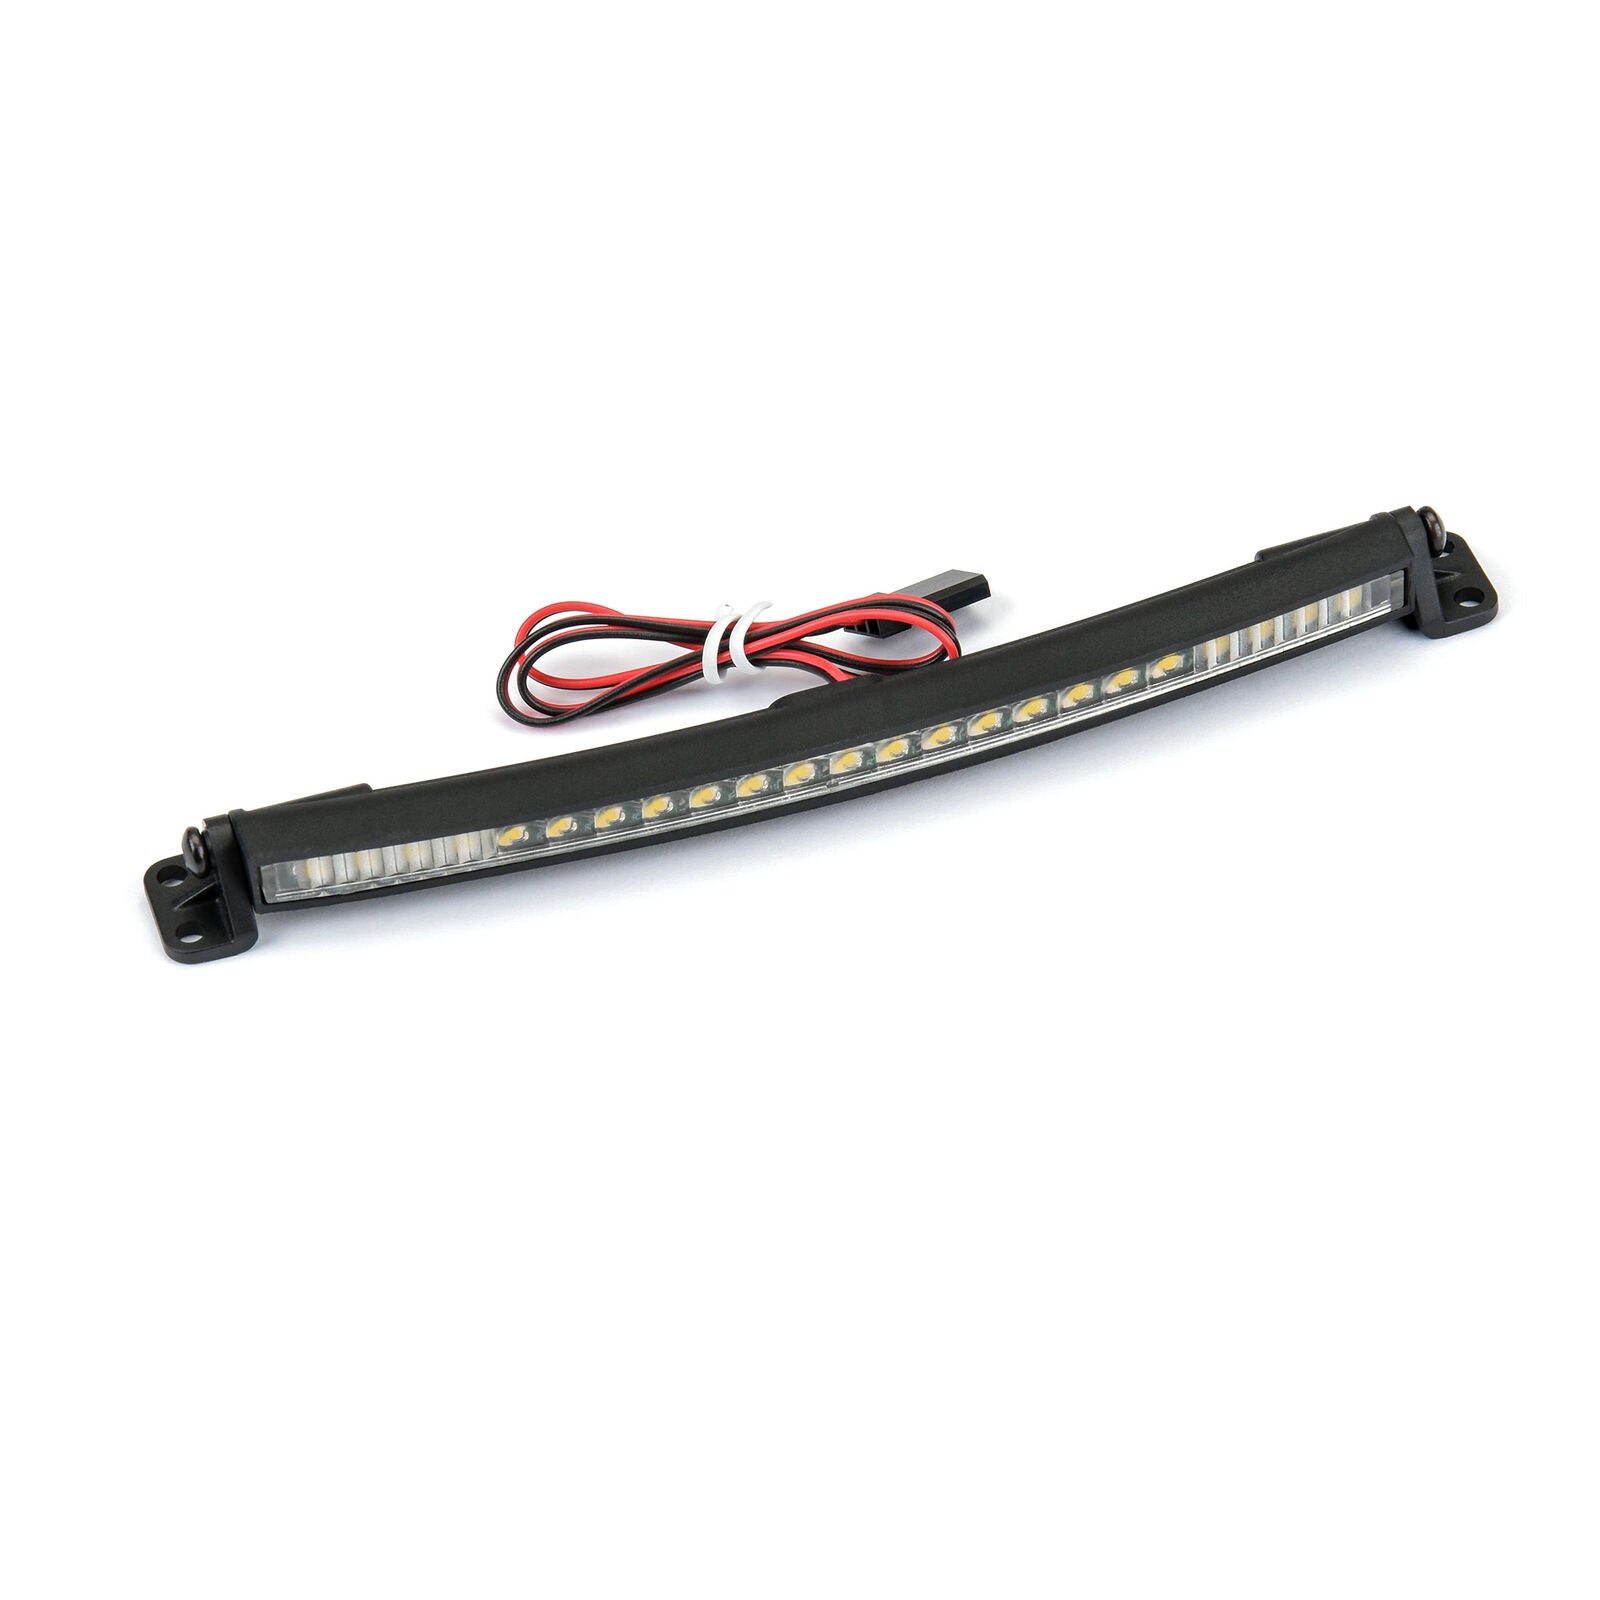 PROLINE 6352-02 5" Ultra-Slim LED Light Bar Kit 5V-12V (Curved)